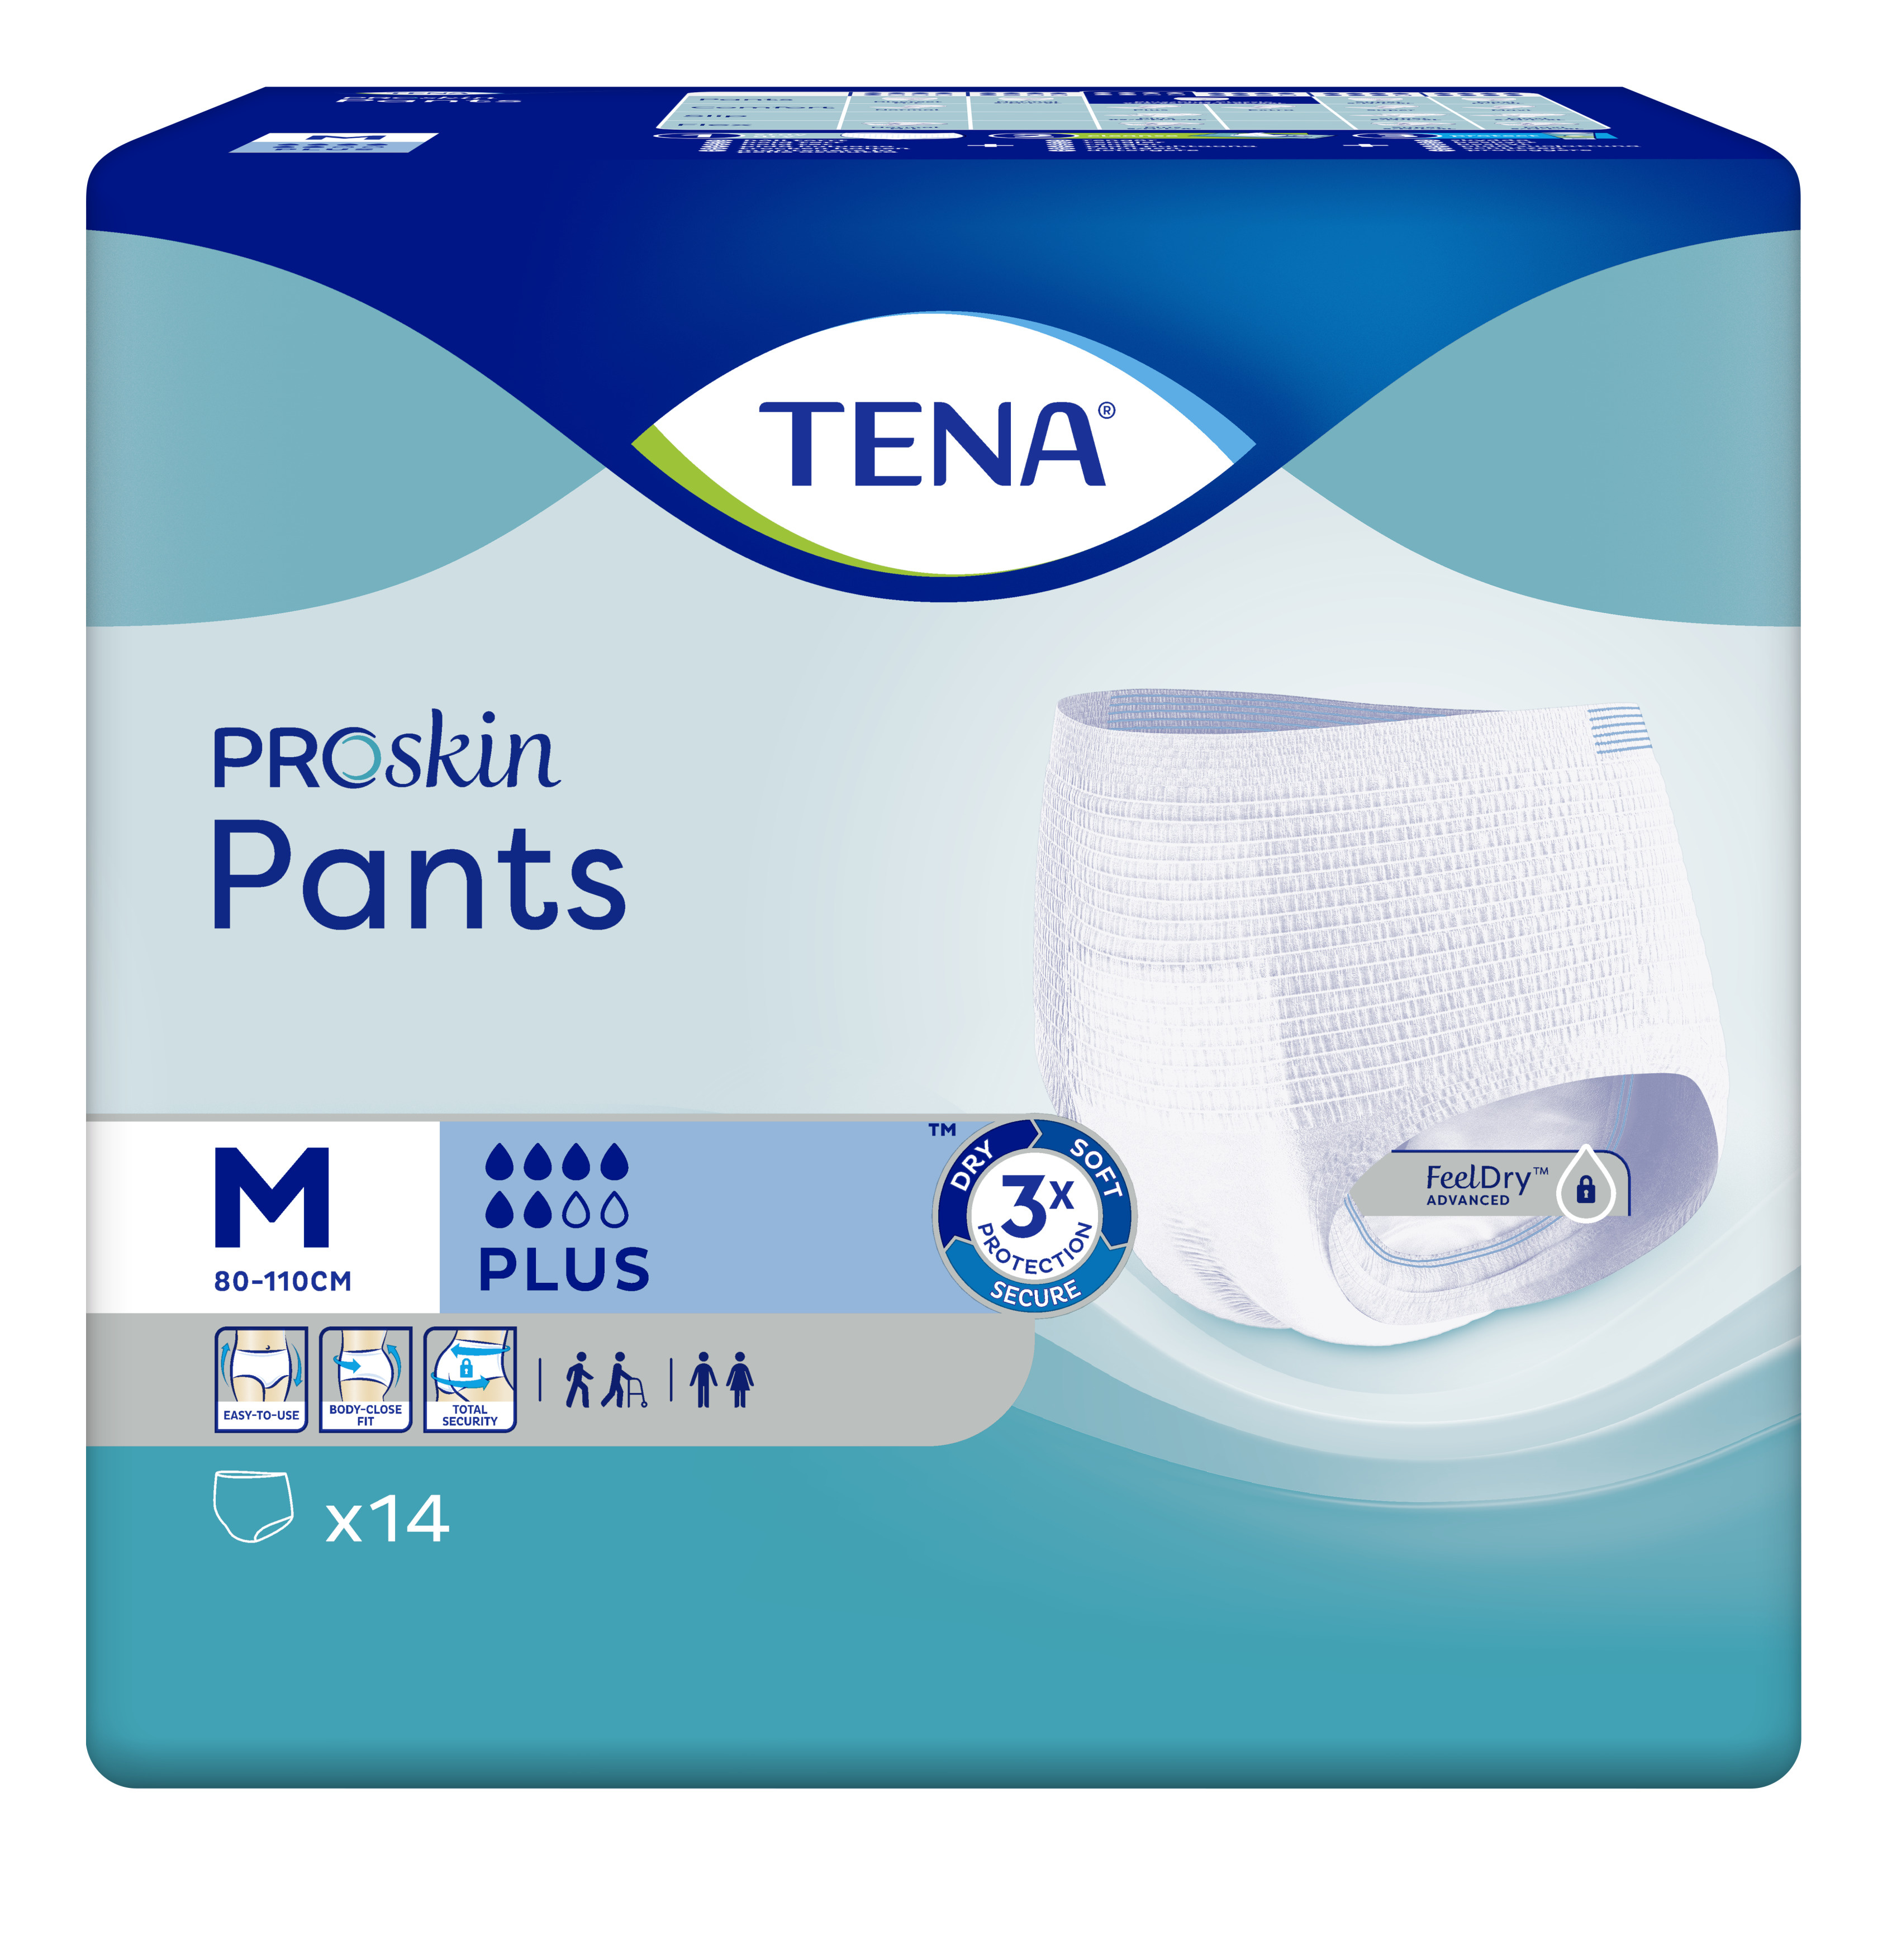 TENA PROskin Pants Plus Medium image 0